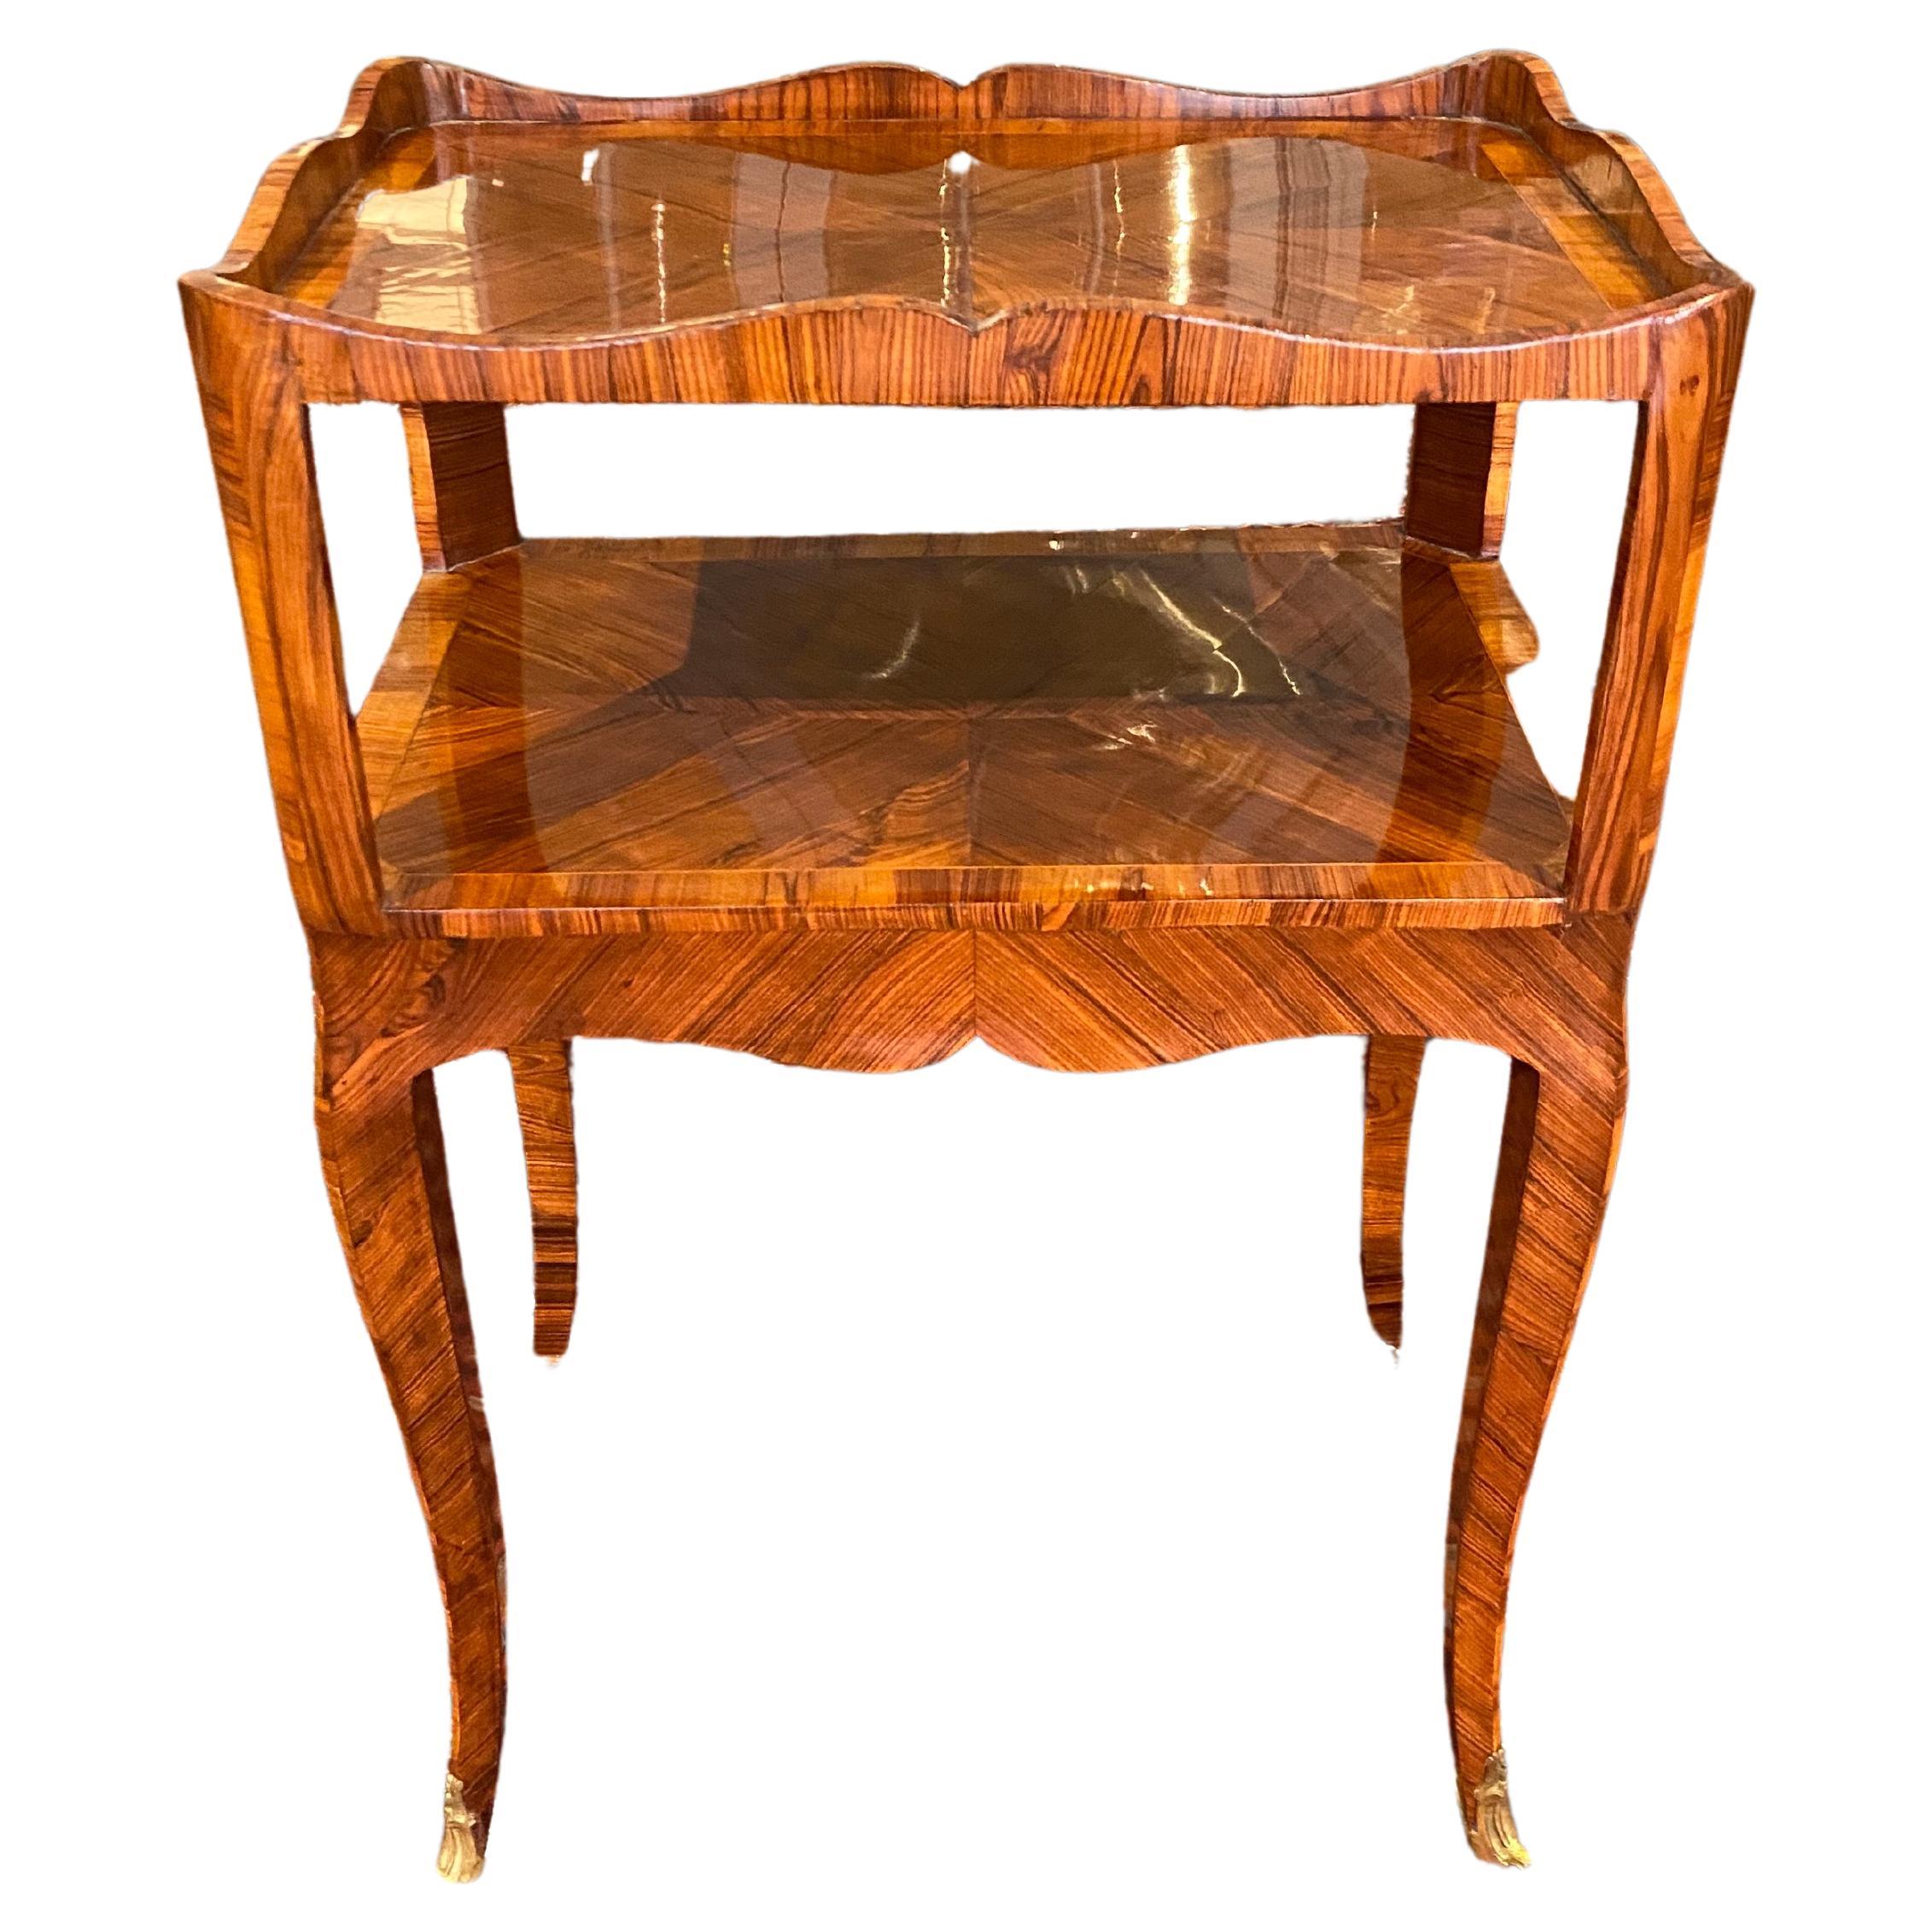 Louis XV Ormolu-Mounted Kingwood Bedside Table, 'Mid 18th Century'